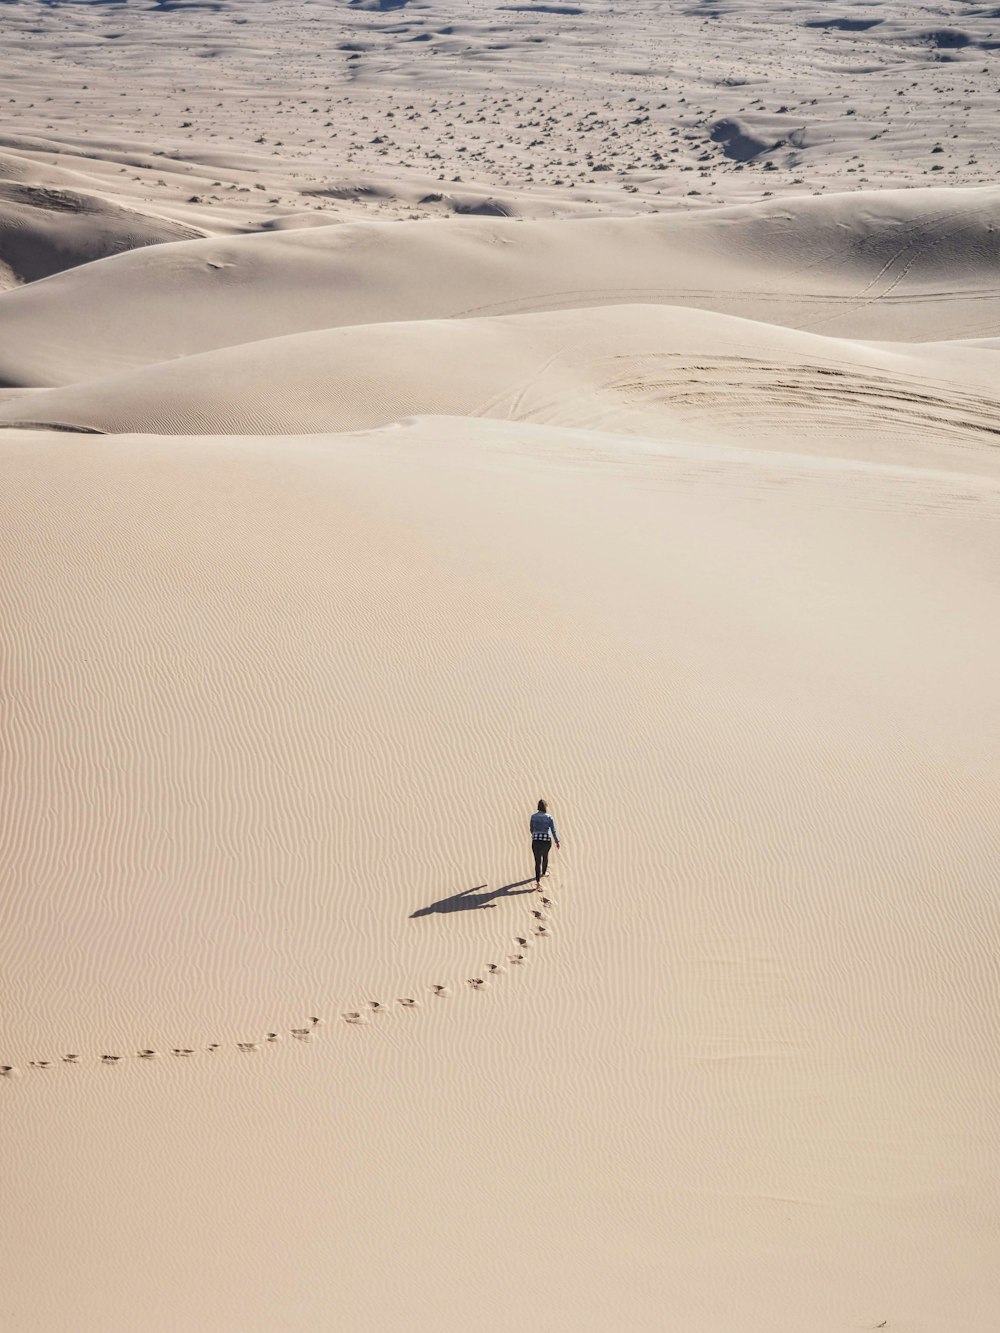 person walking on desert sand during daytime